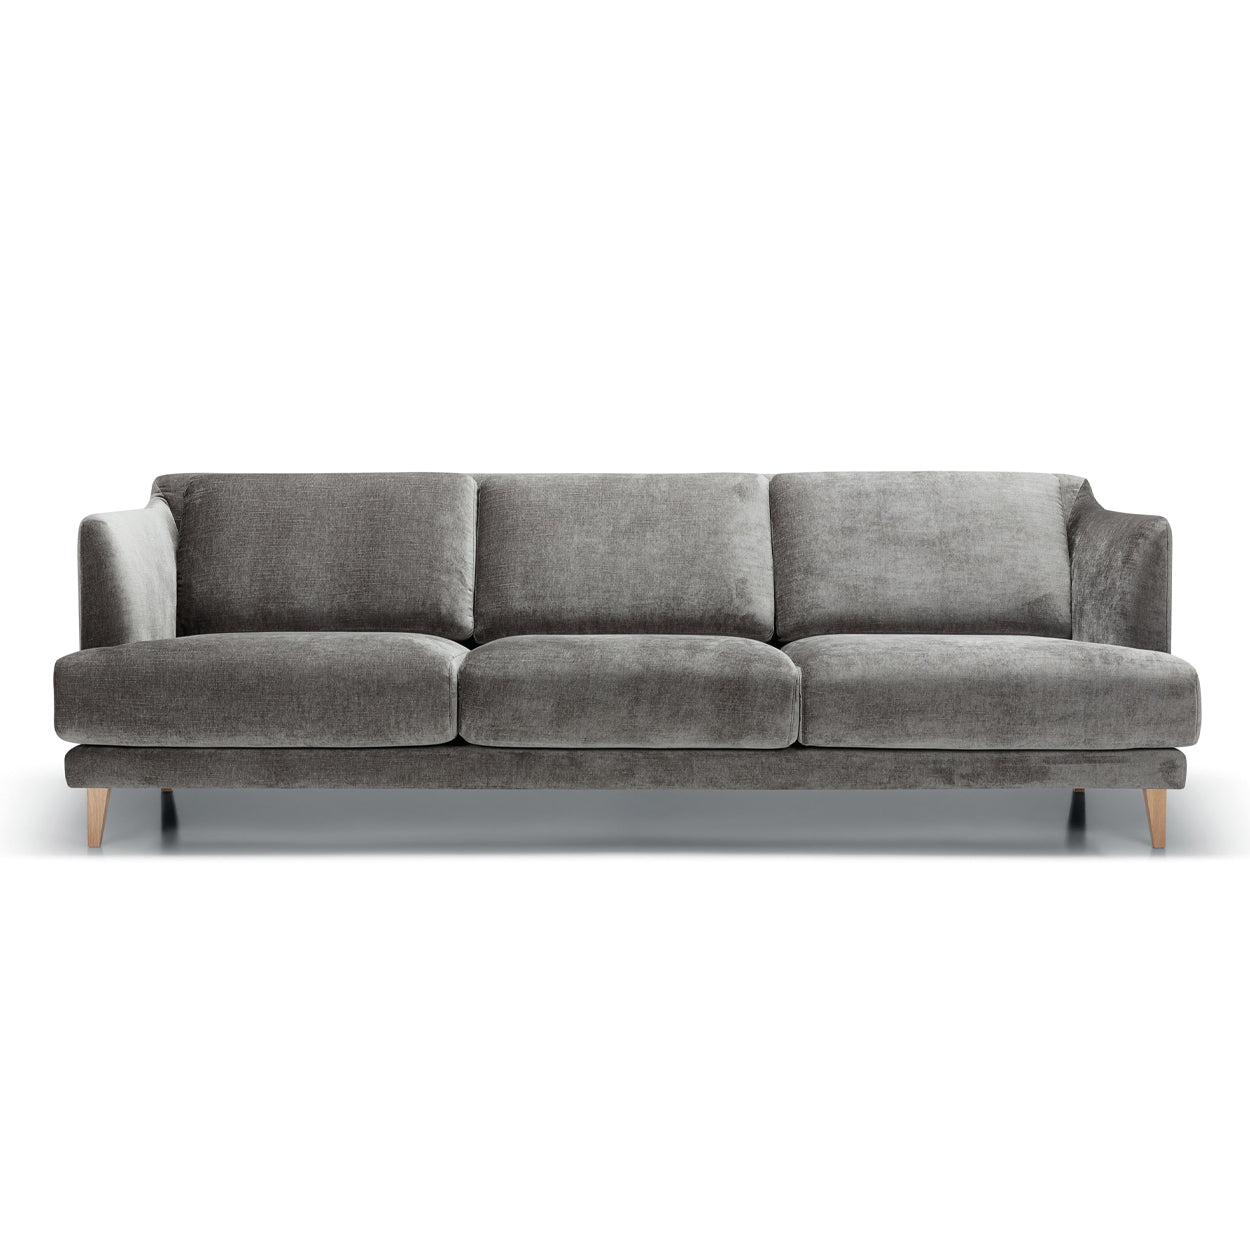 Wren Sofa - Lux - Extra Large Split Sofa (3 Seat Cushions)